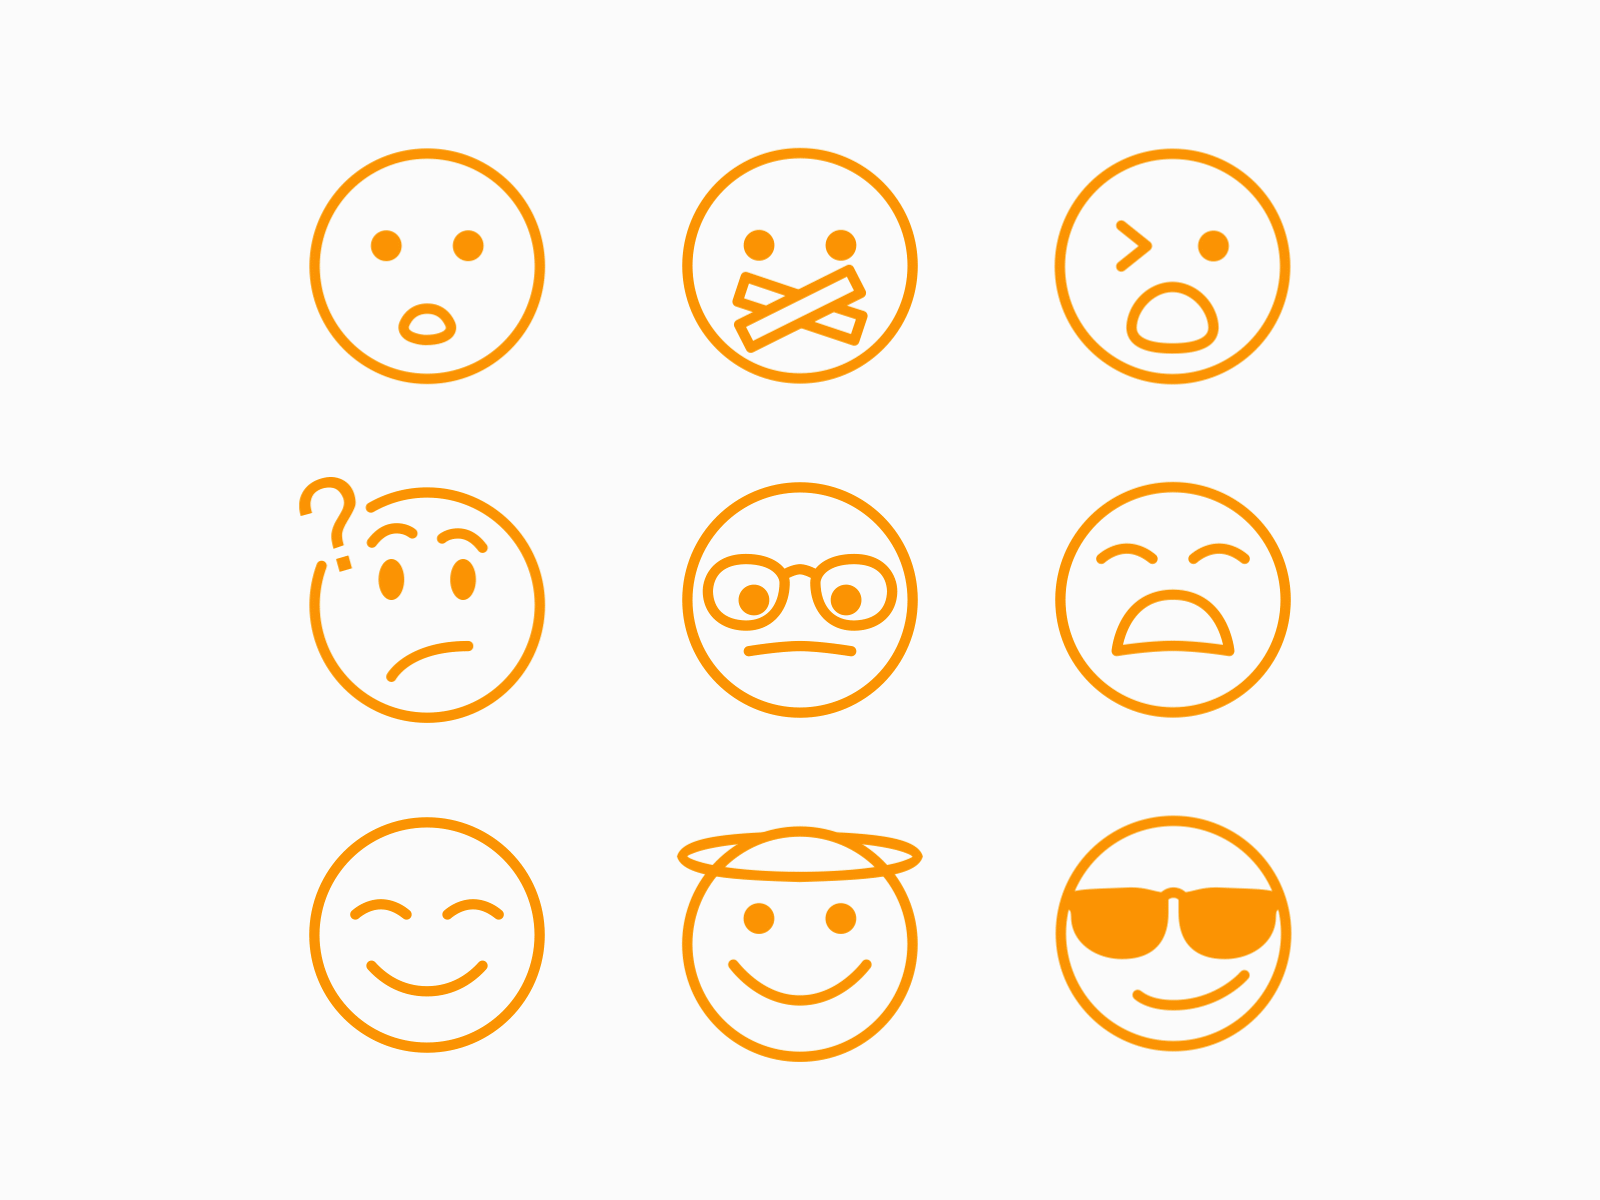 Animated emoji set by Nikita Kozin for Icons8 on Dribbble